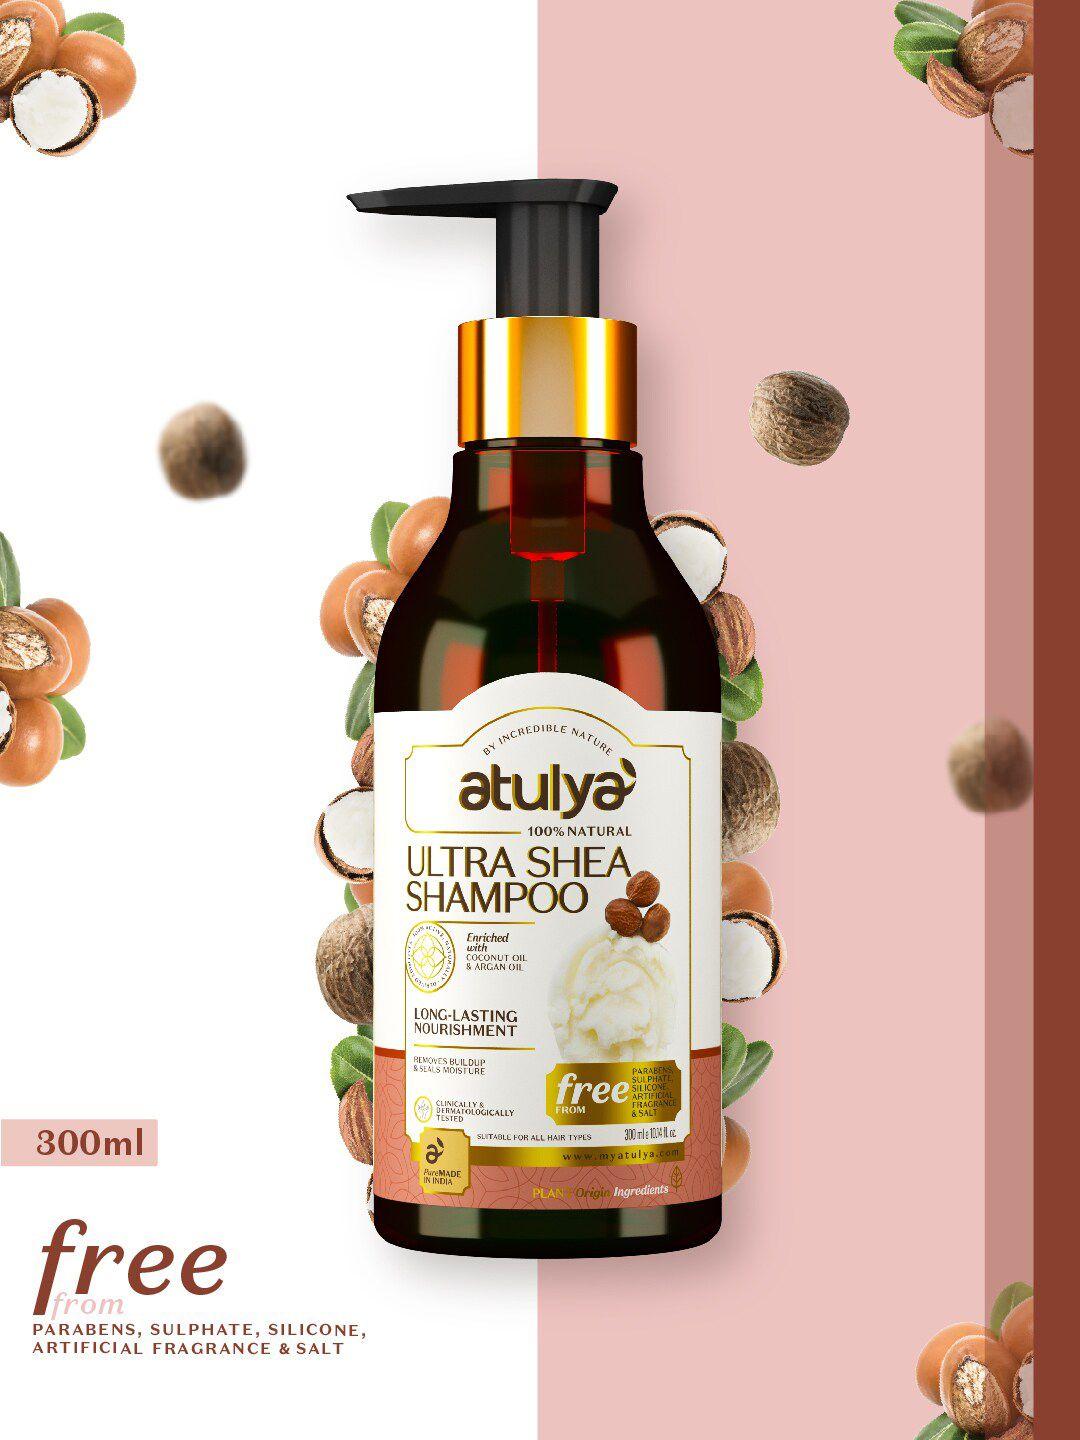 atulya-ultra-shea-shampoo-300ml